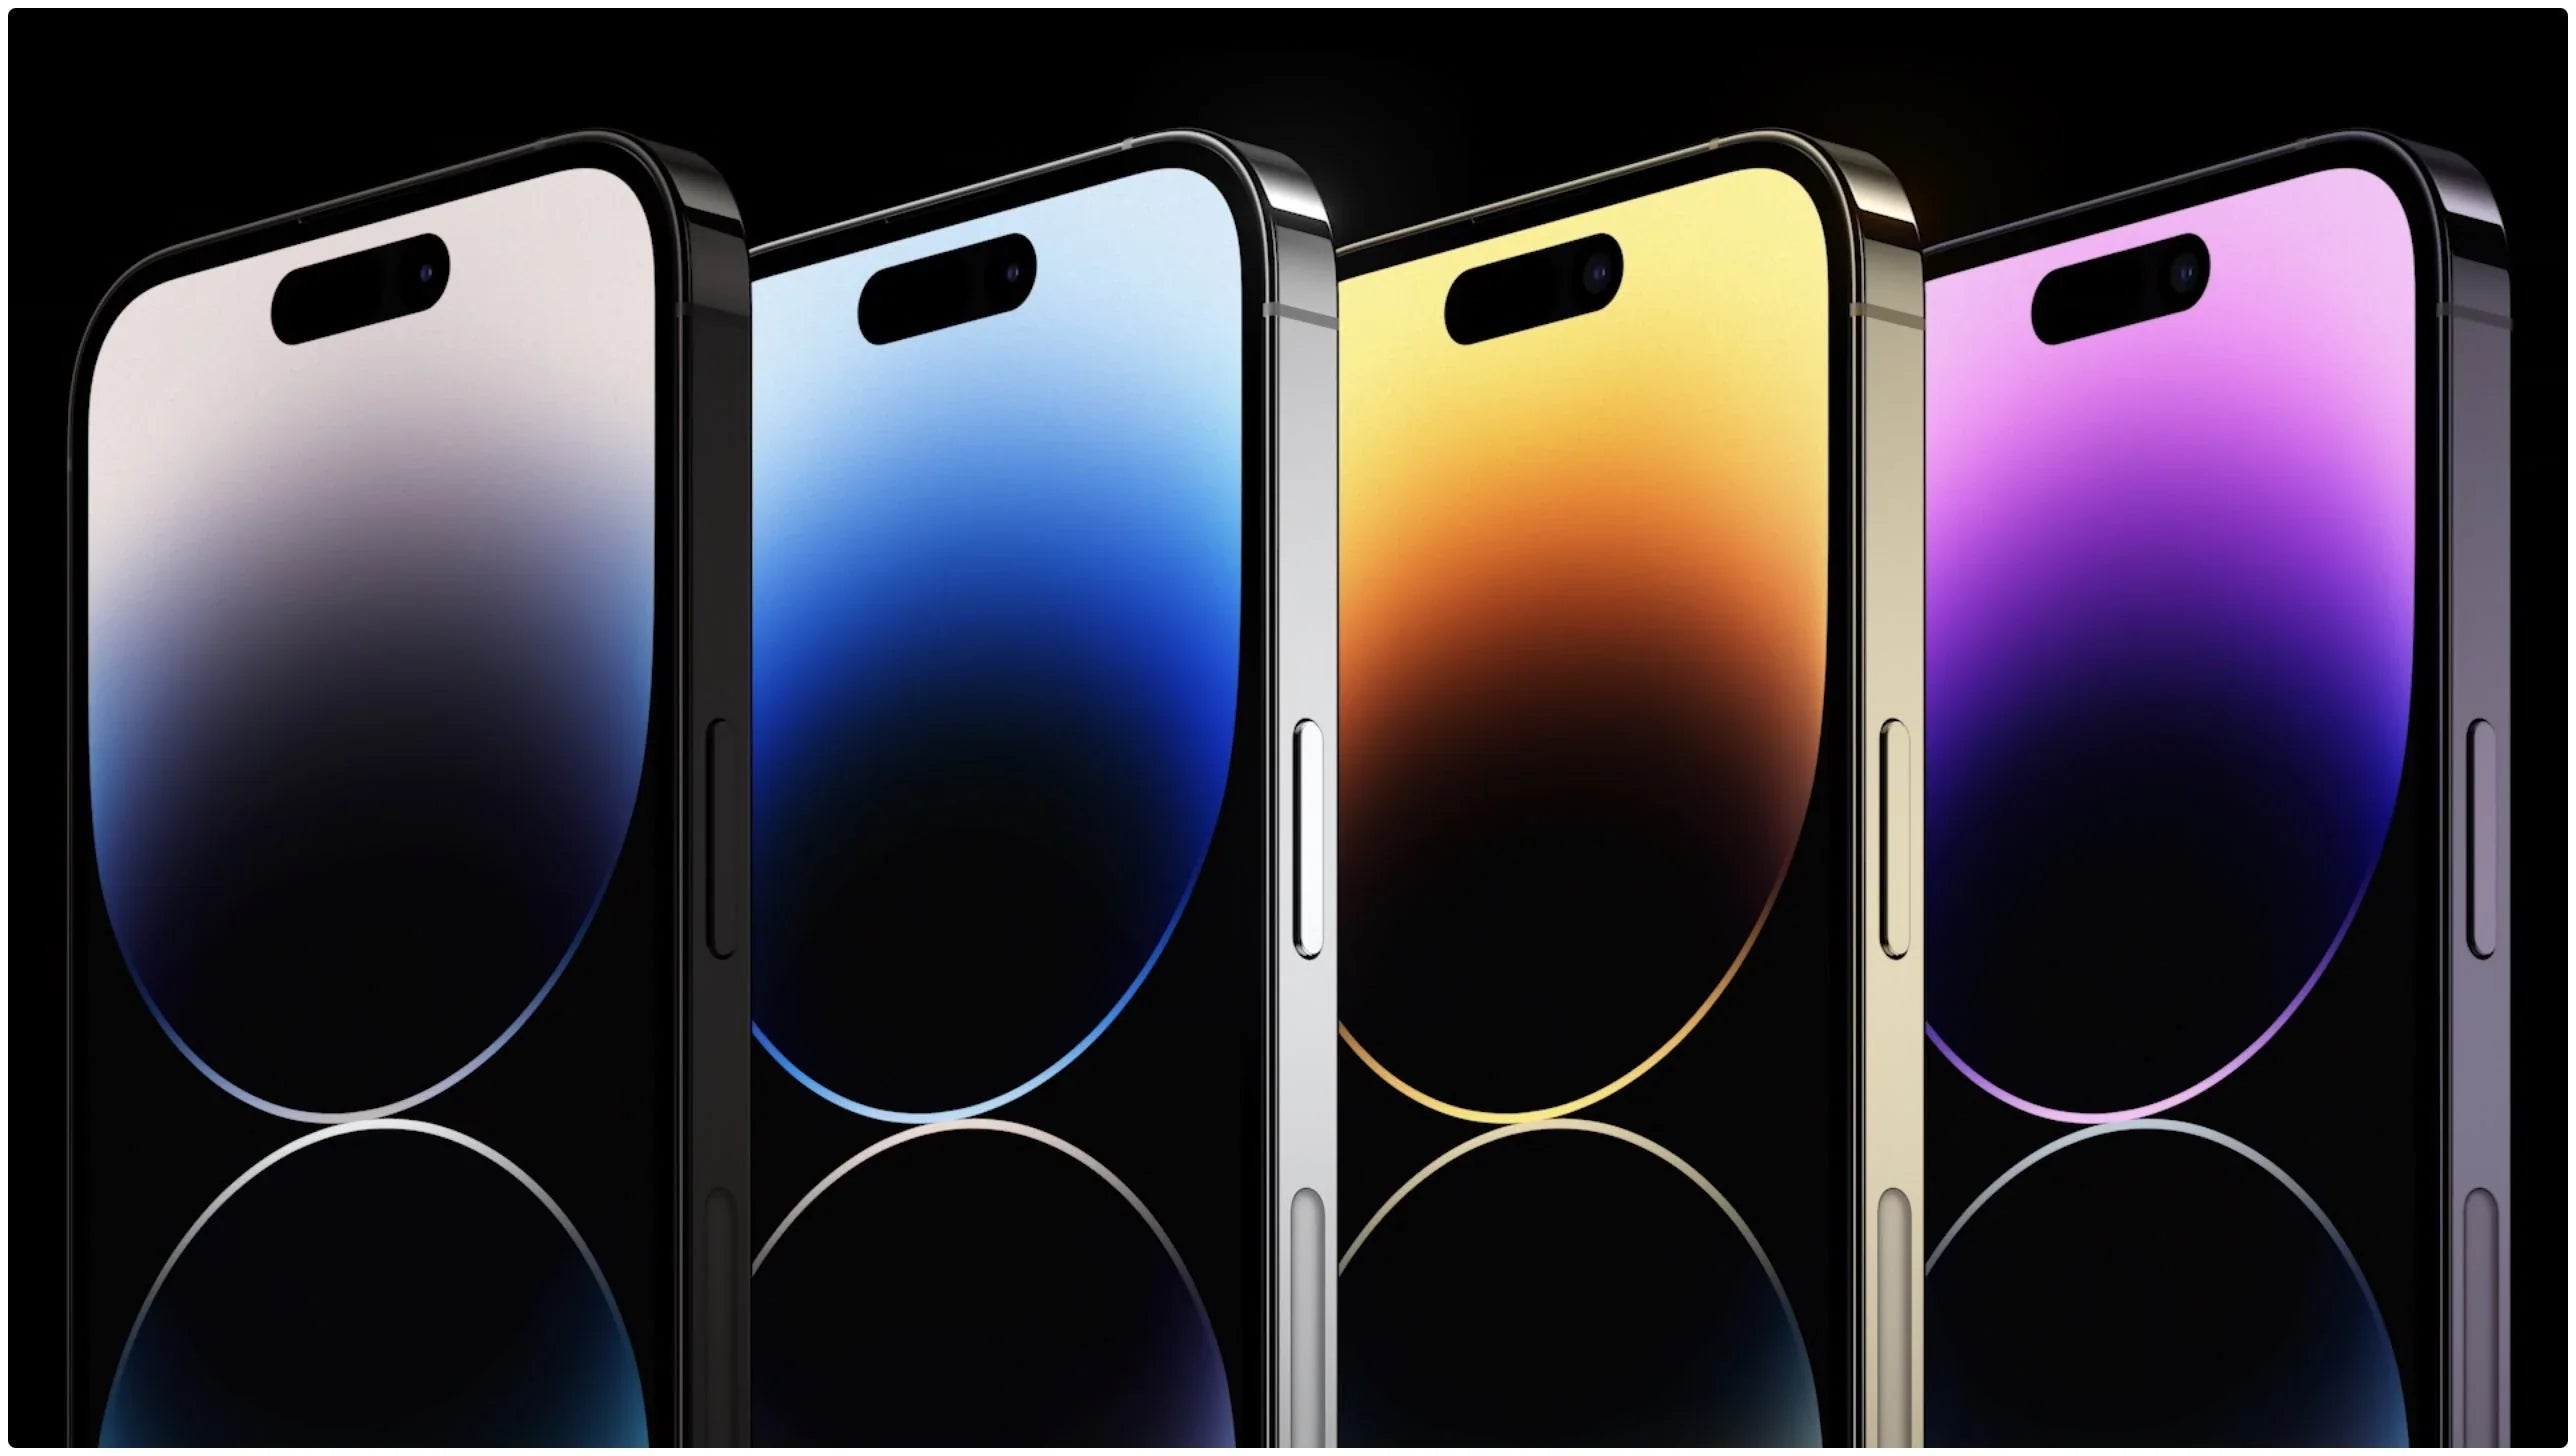 Iphone cases-IPhone covers-iPhone lab-reparacion de iphone-apple